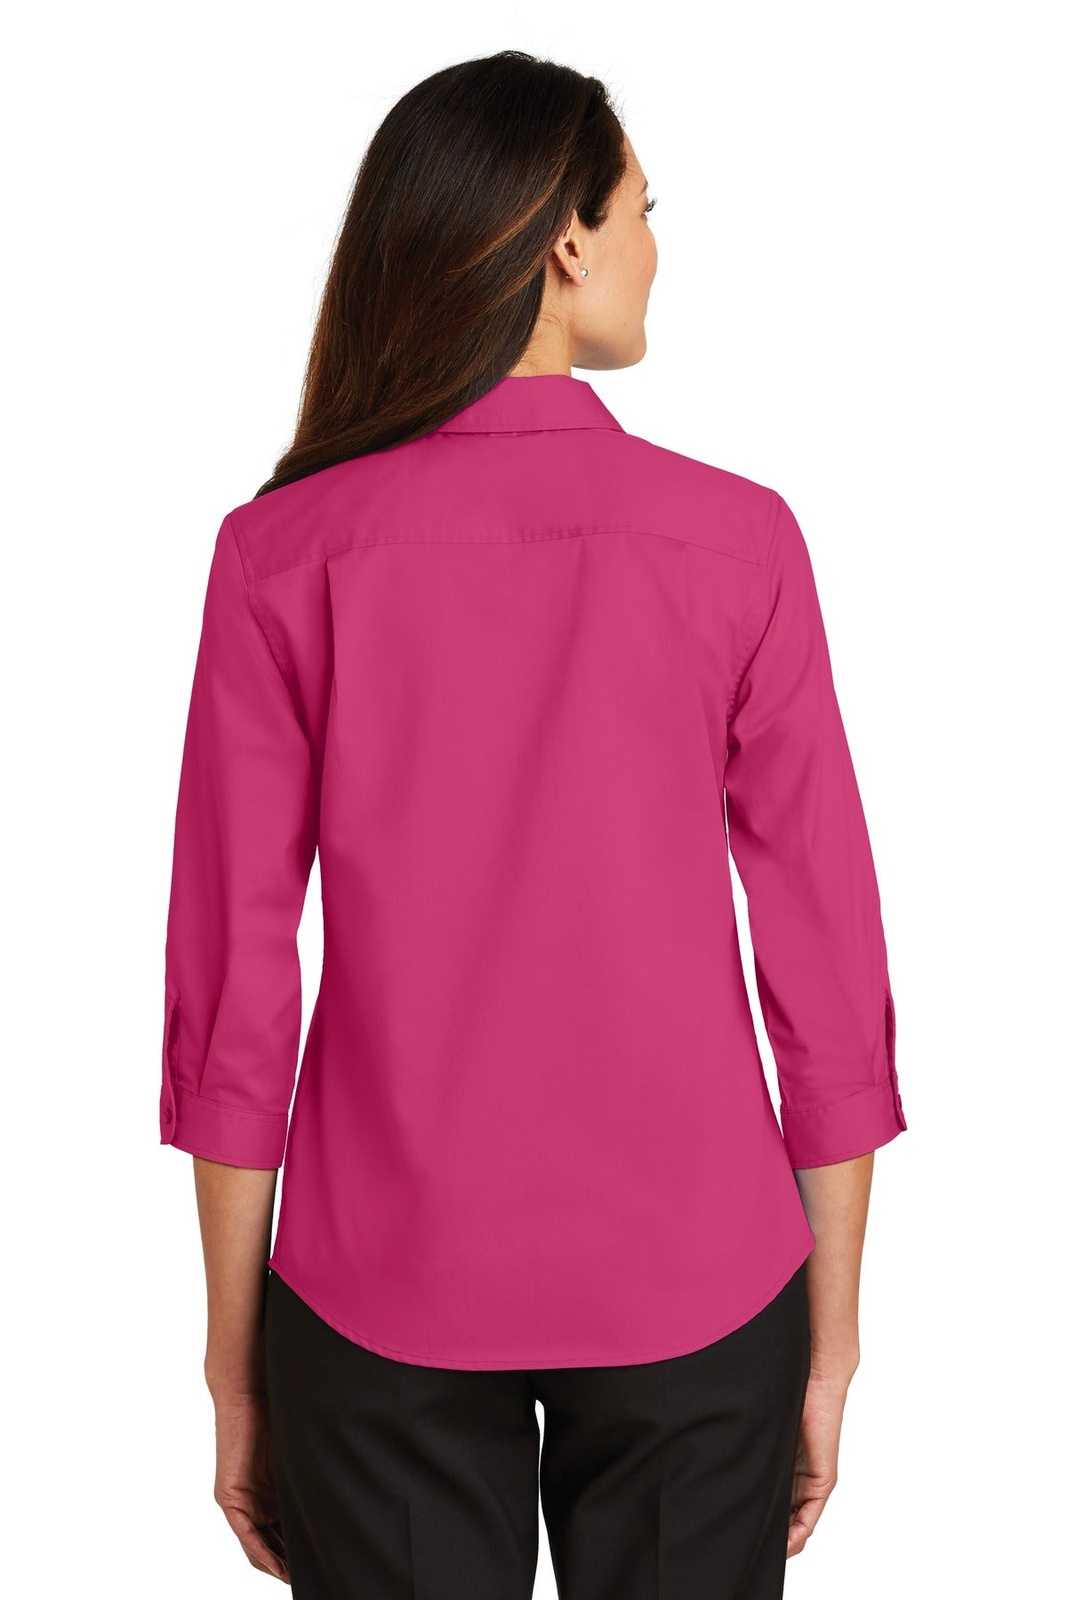 Port Authority L665 Ladies 3/4-Sleeve Superpro Twill Shirt - Pink Azalea - HIT a Double - 1